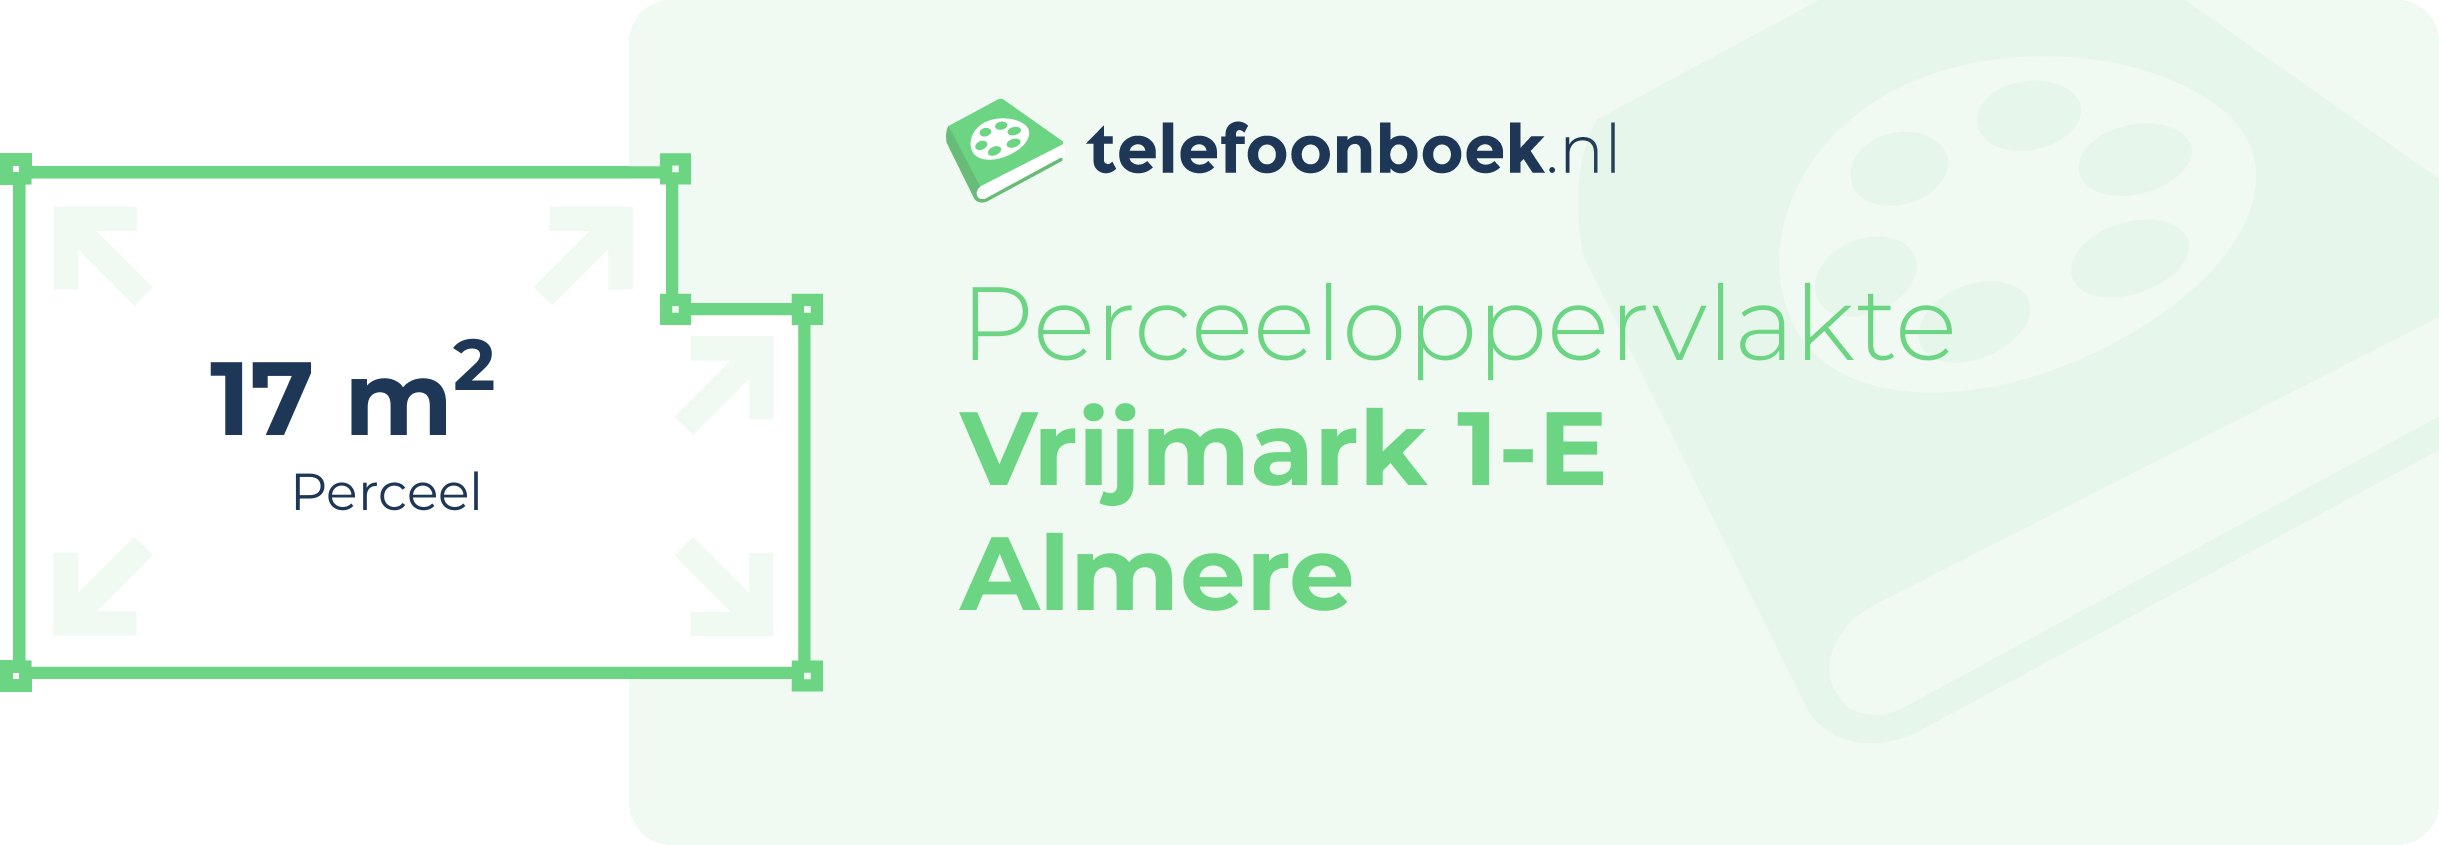 Perceeloppervlakte Vrijmark 1-E Almere